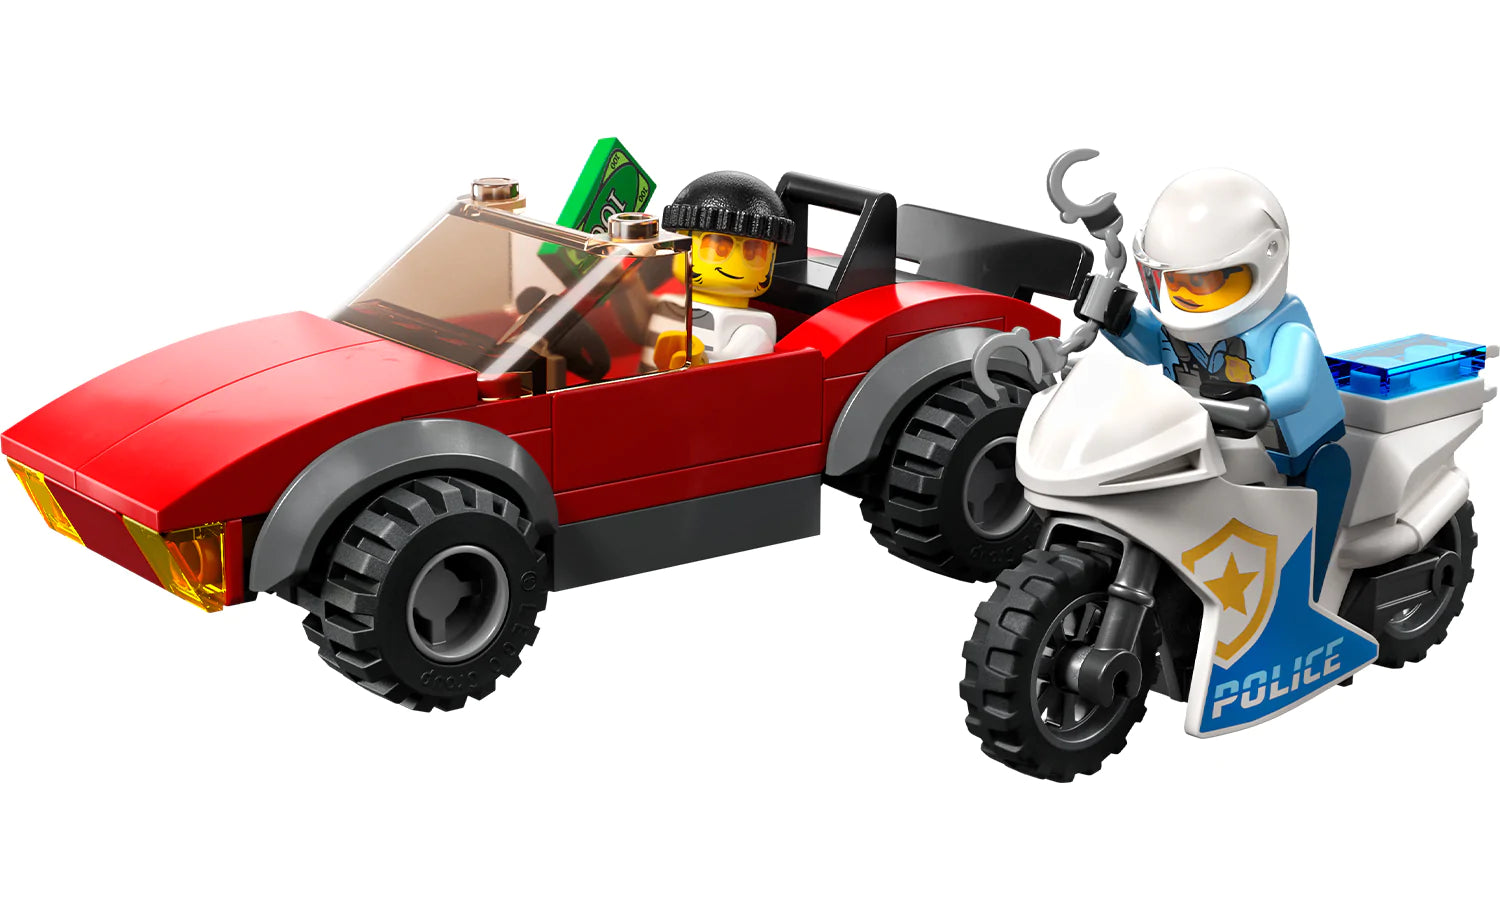 60392 LEGO® City Police Bike Car Chase